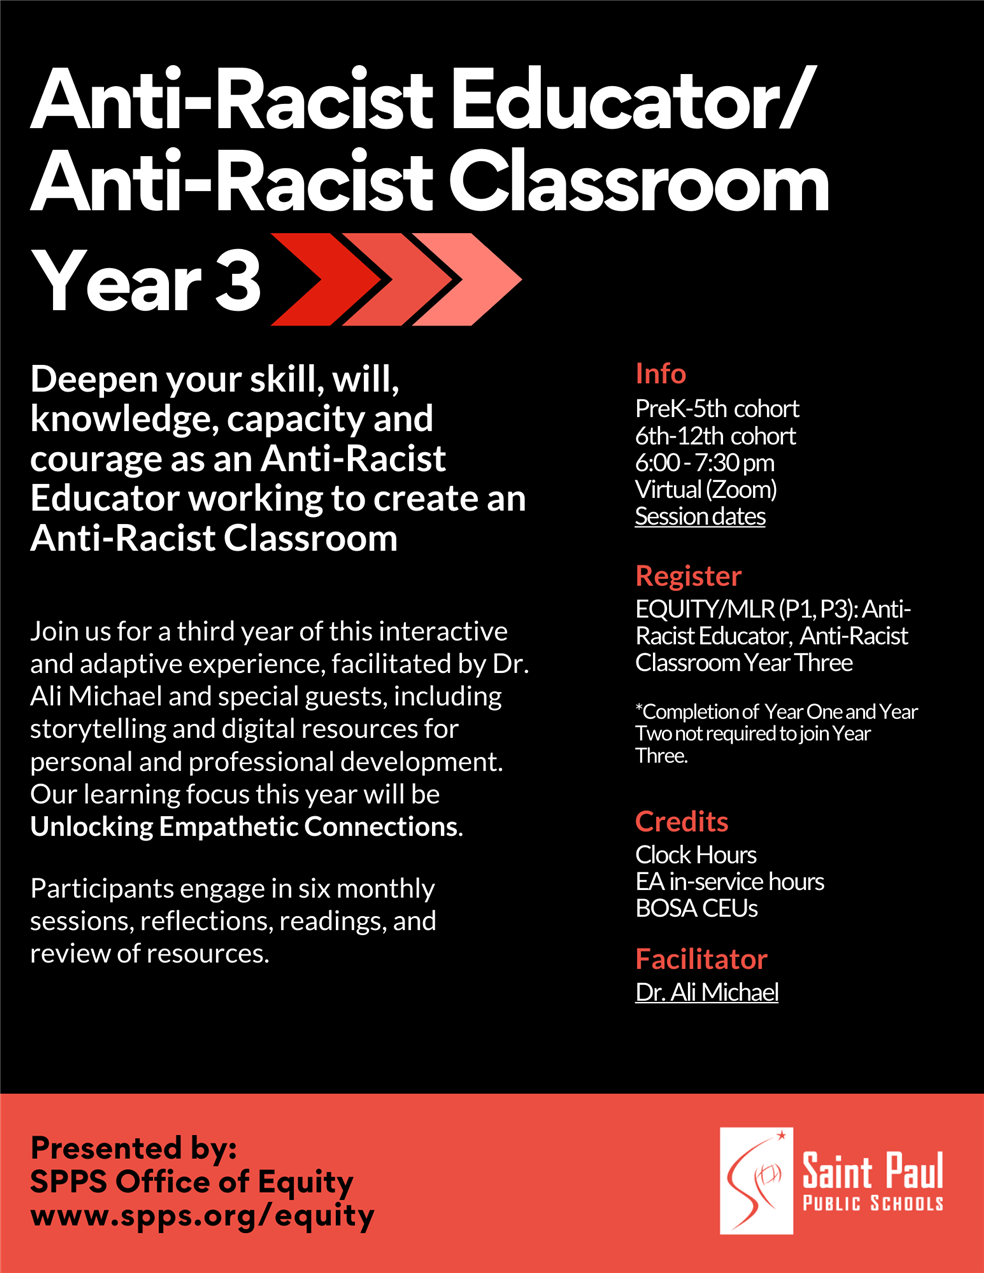 Anti-Racist Educator, Anti-Racist Classroom Year 3 flyer